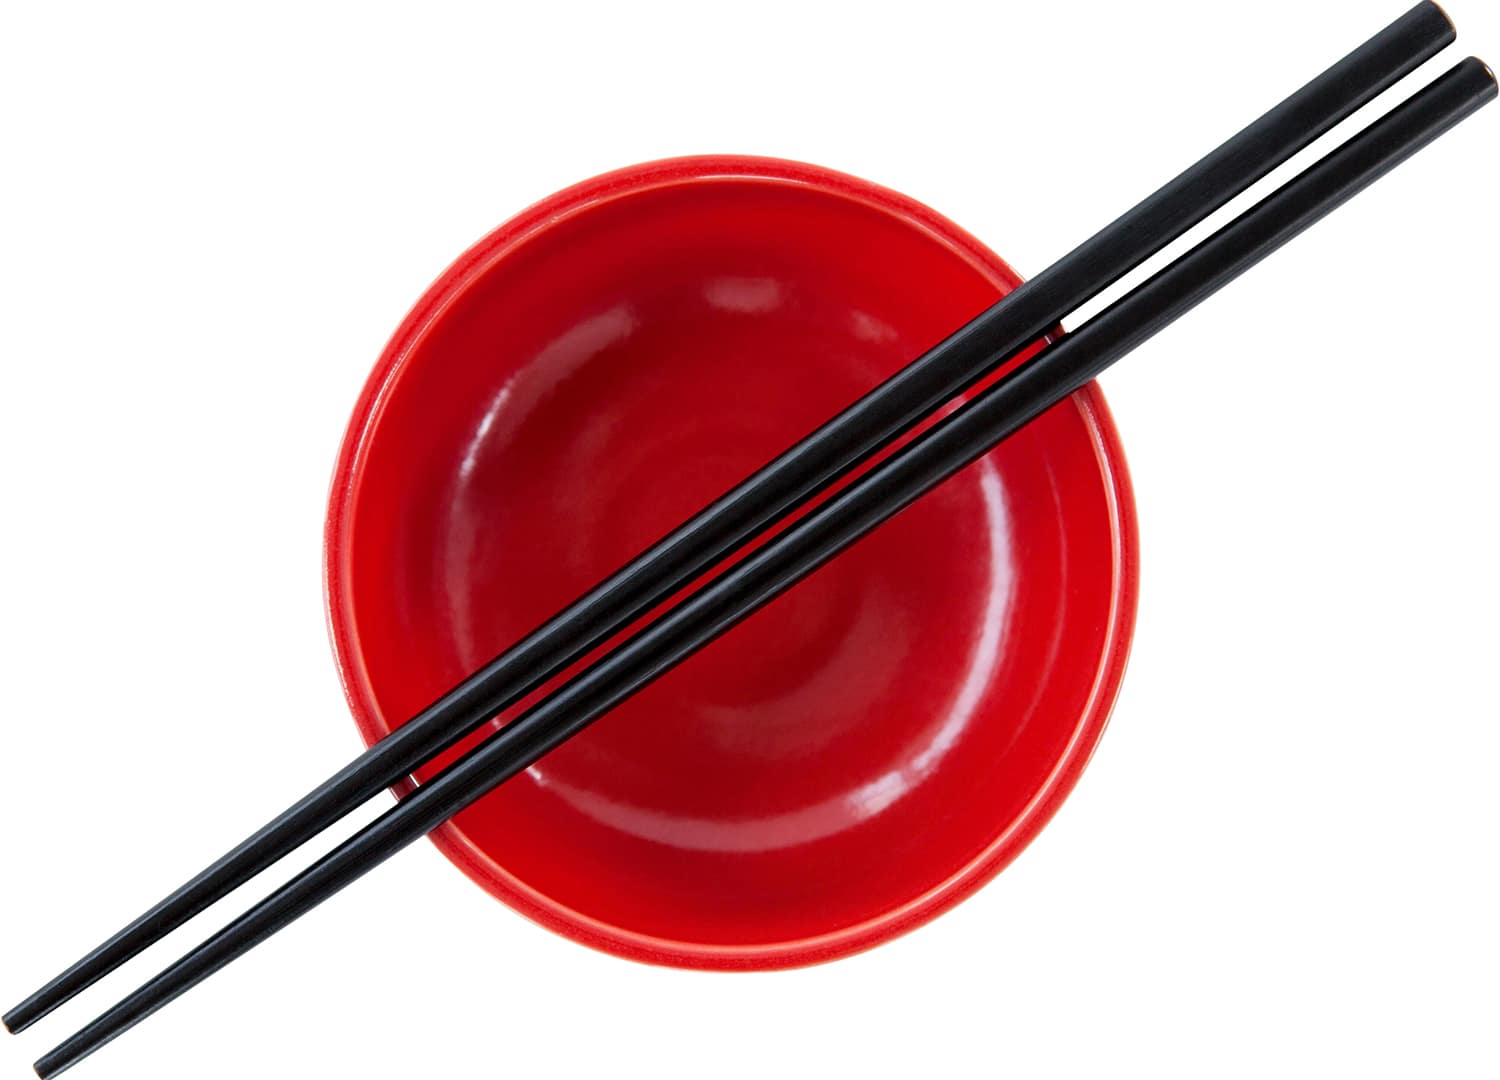 Laquered bowl and chopsticks